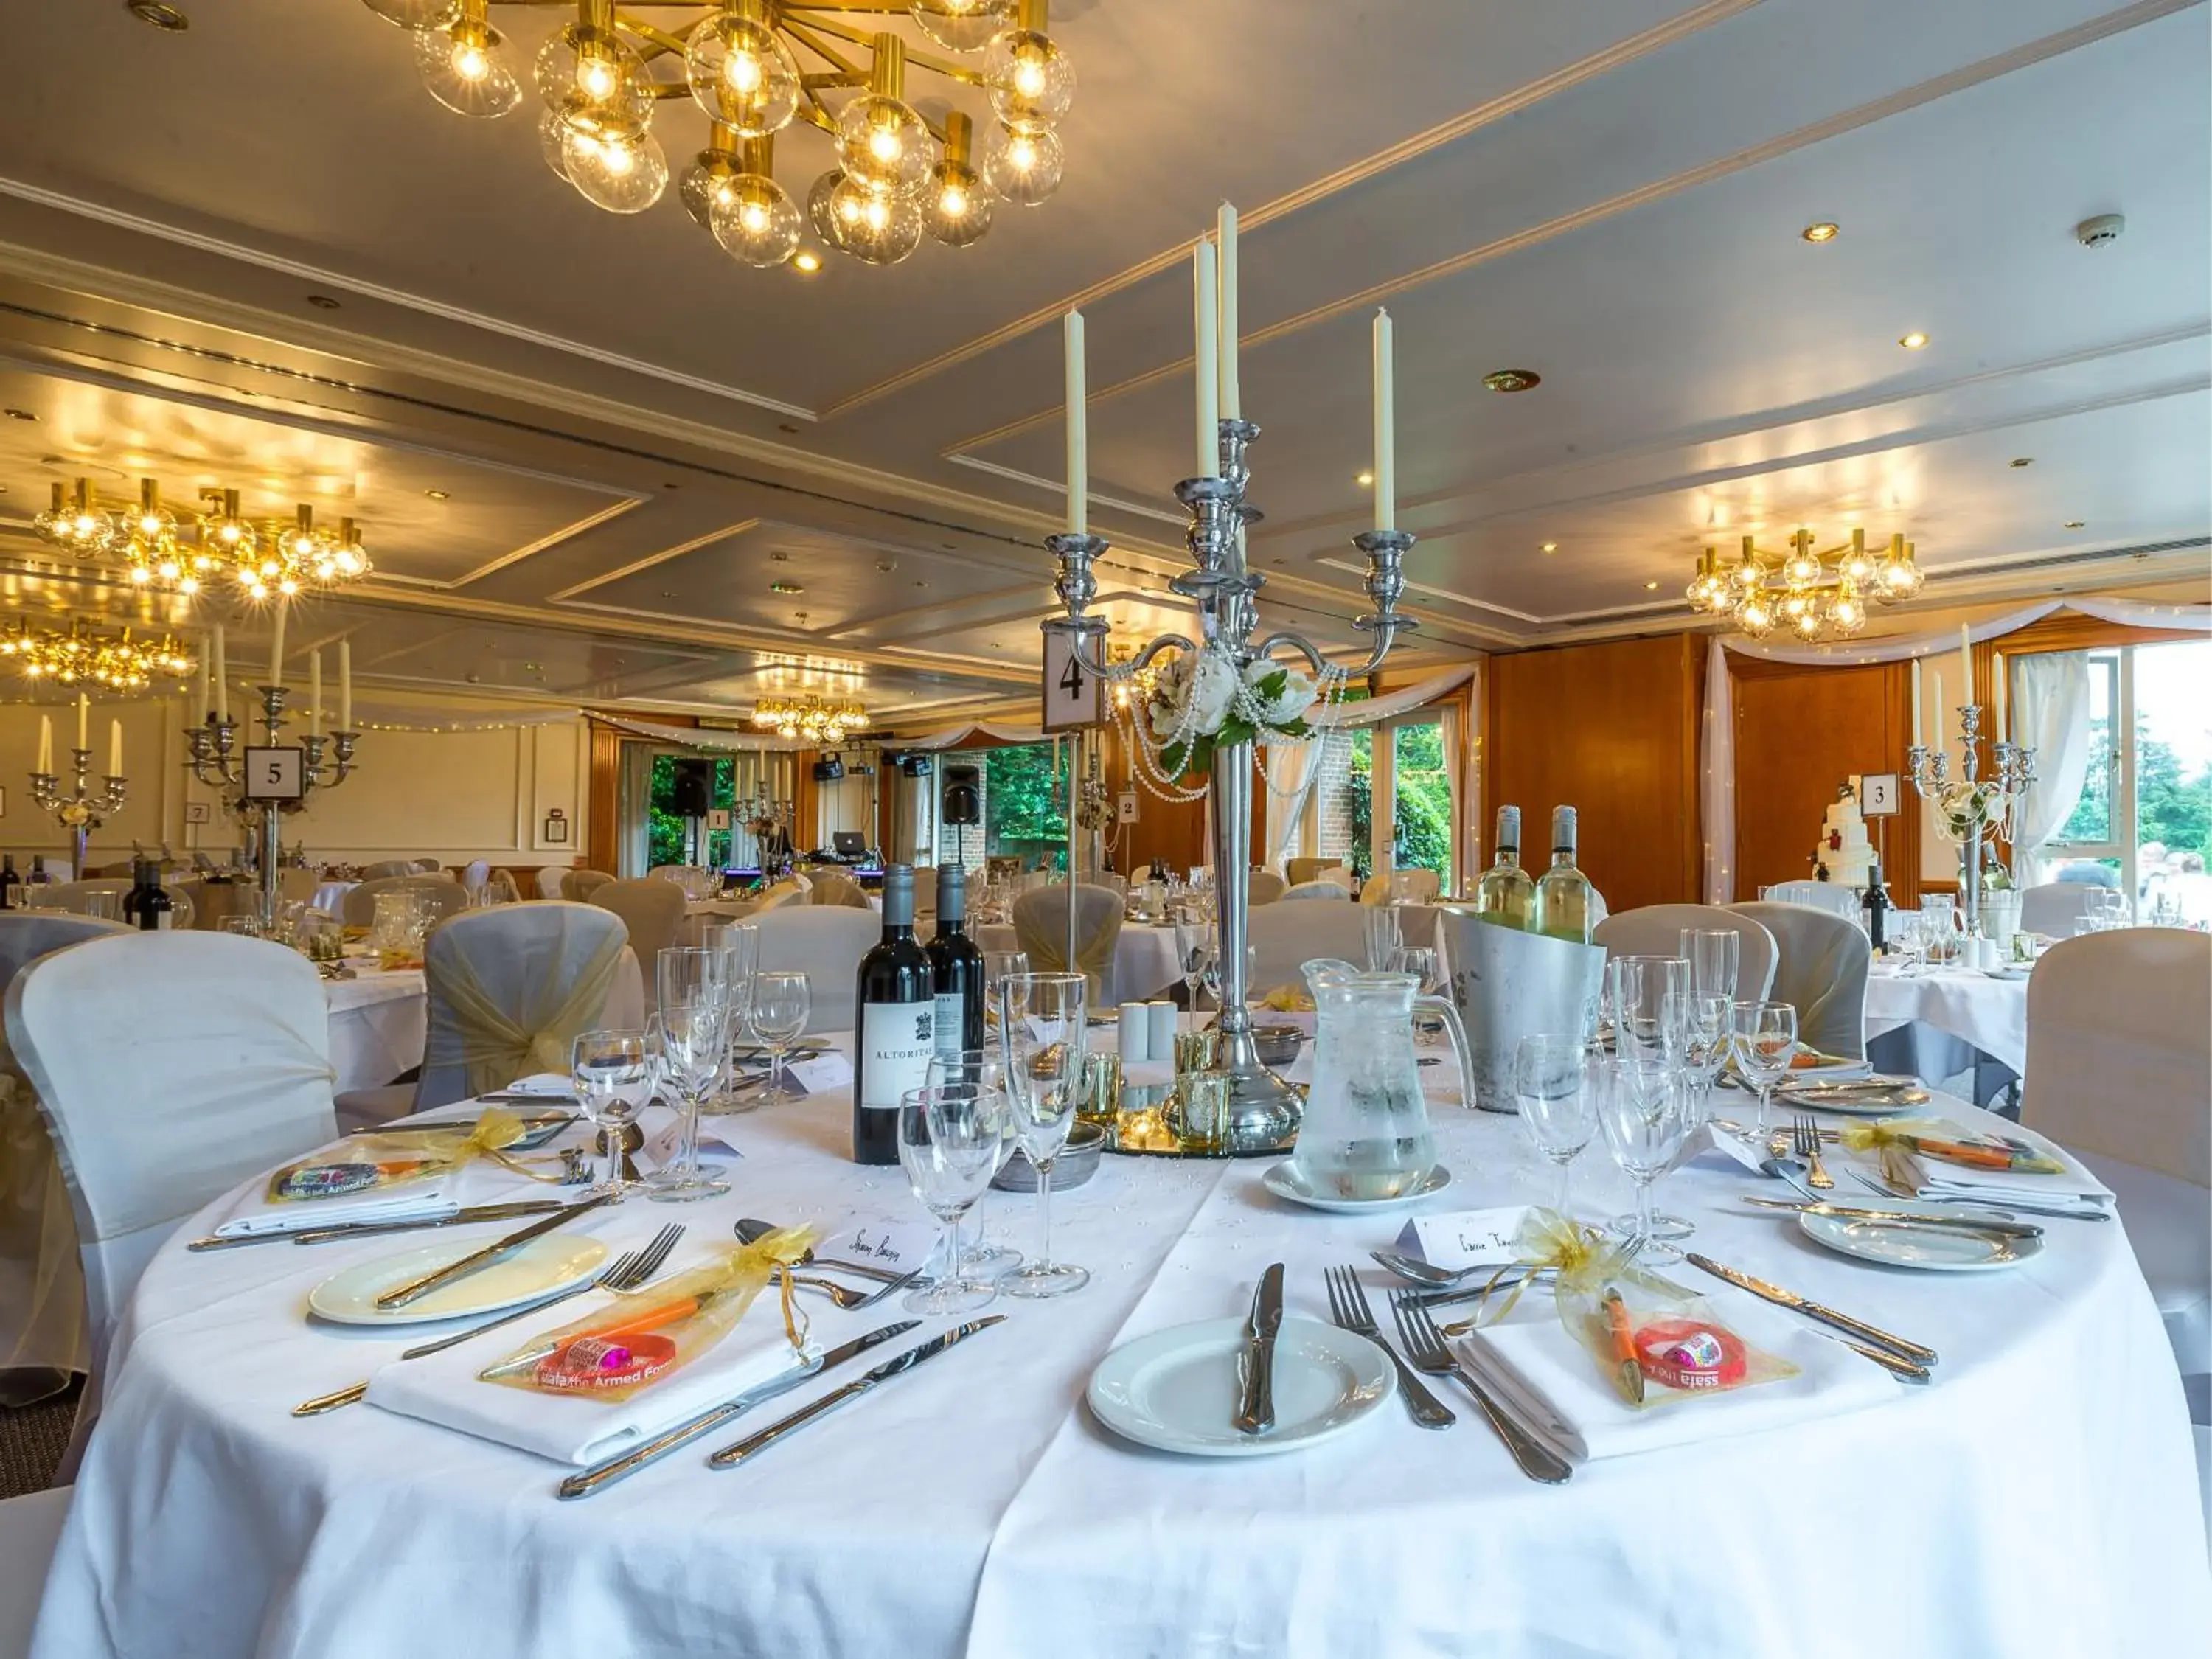 Banquet/Function facilities, Banquet Facilities in Fredrick's Hotel Restaurant Spa